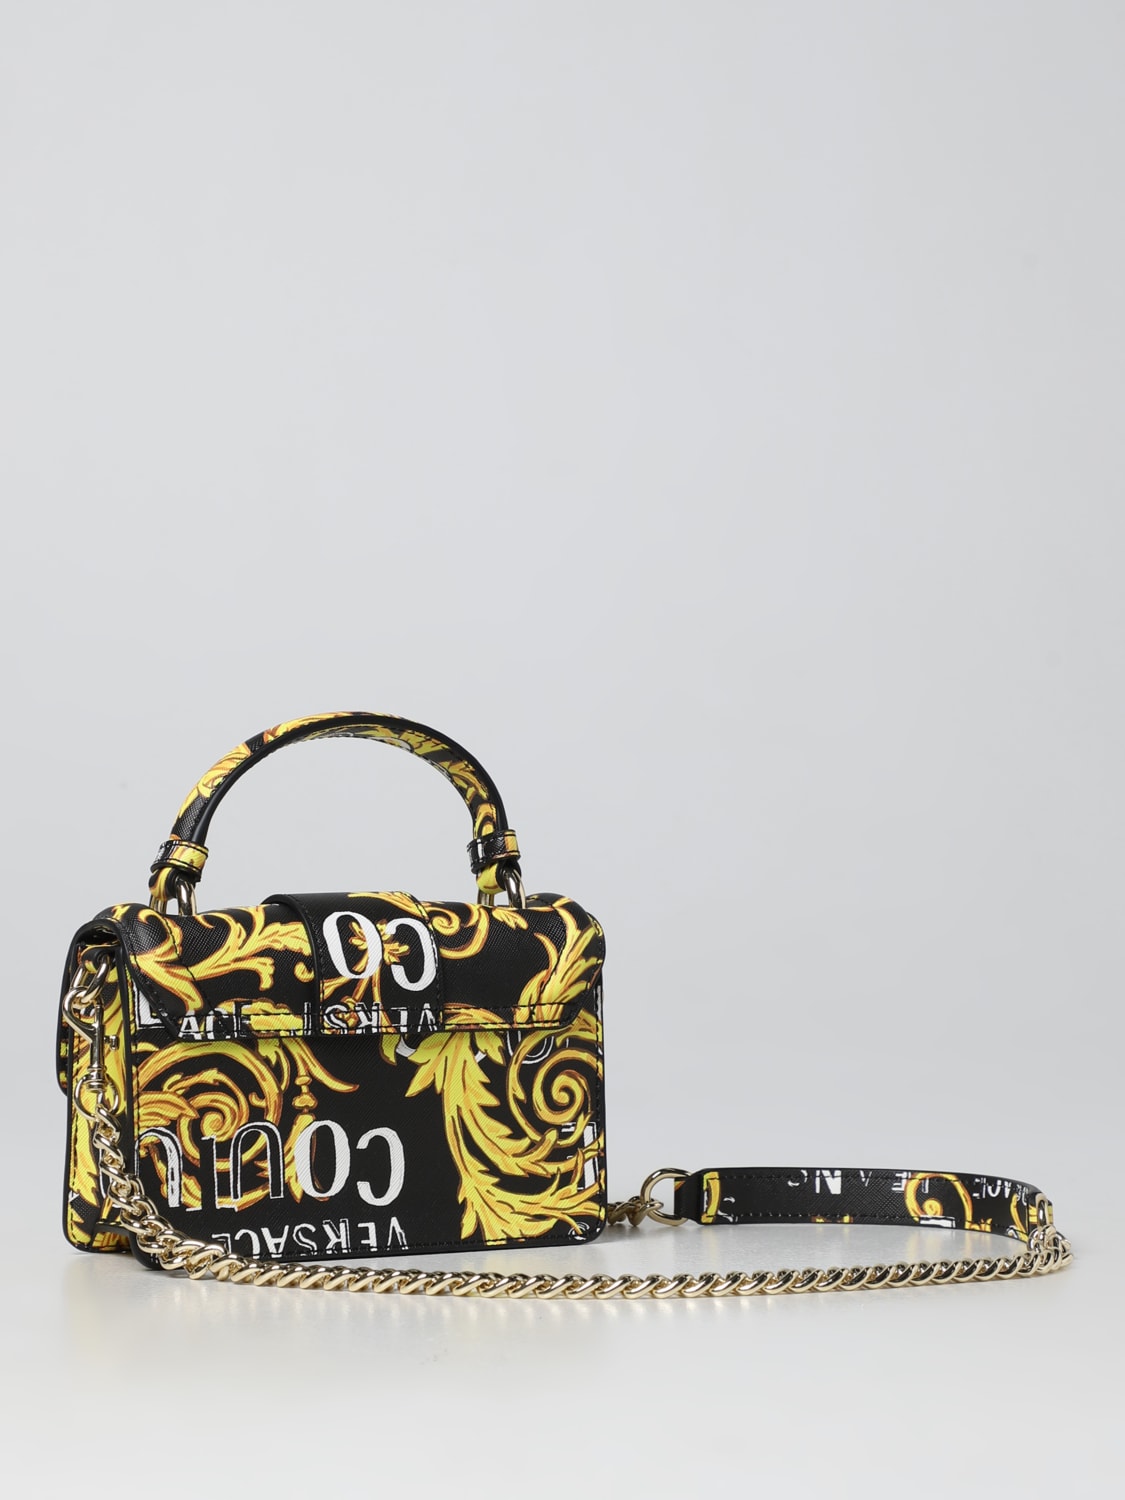 Versace Leather Printed Waist Bag - Yellow Waist Bags, Handbags